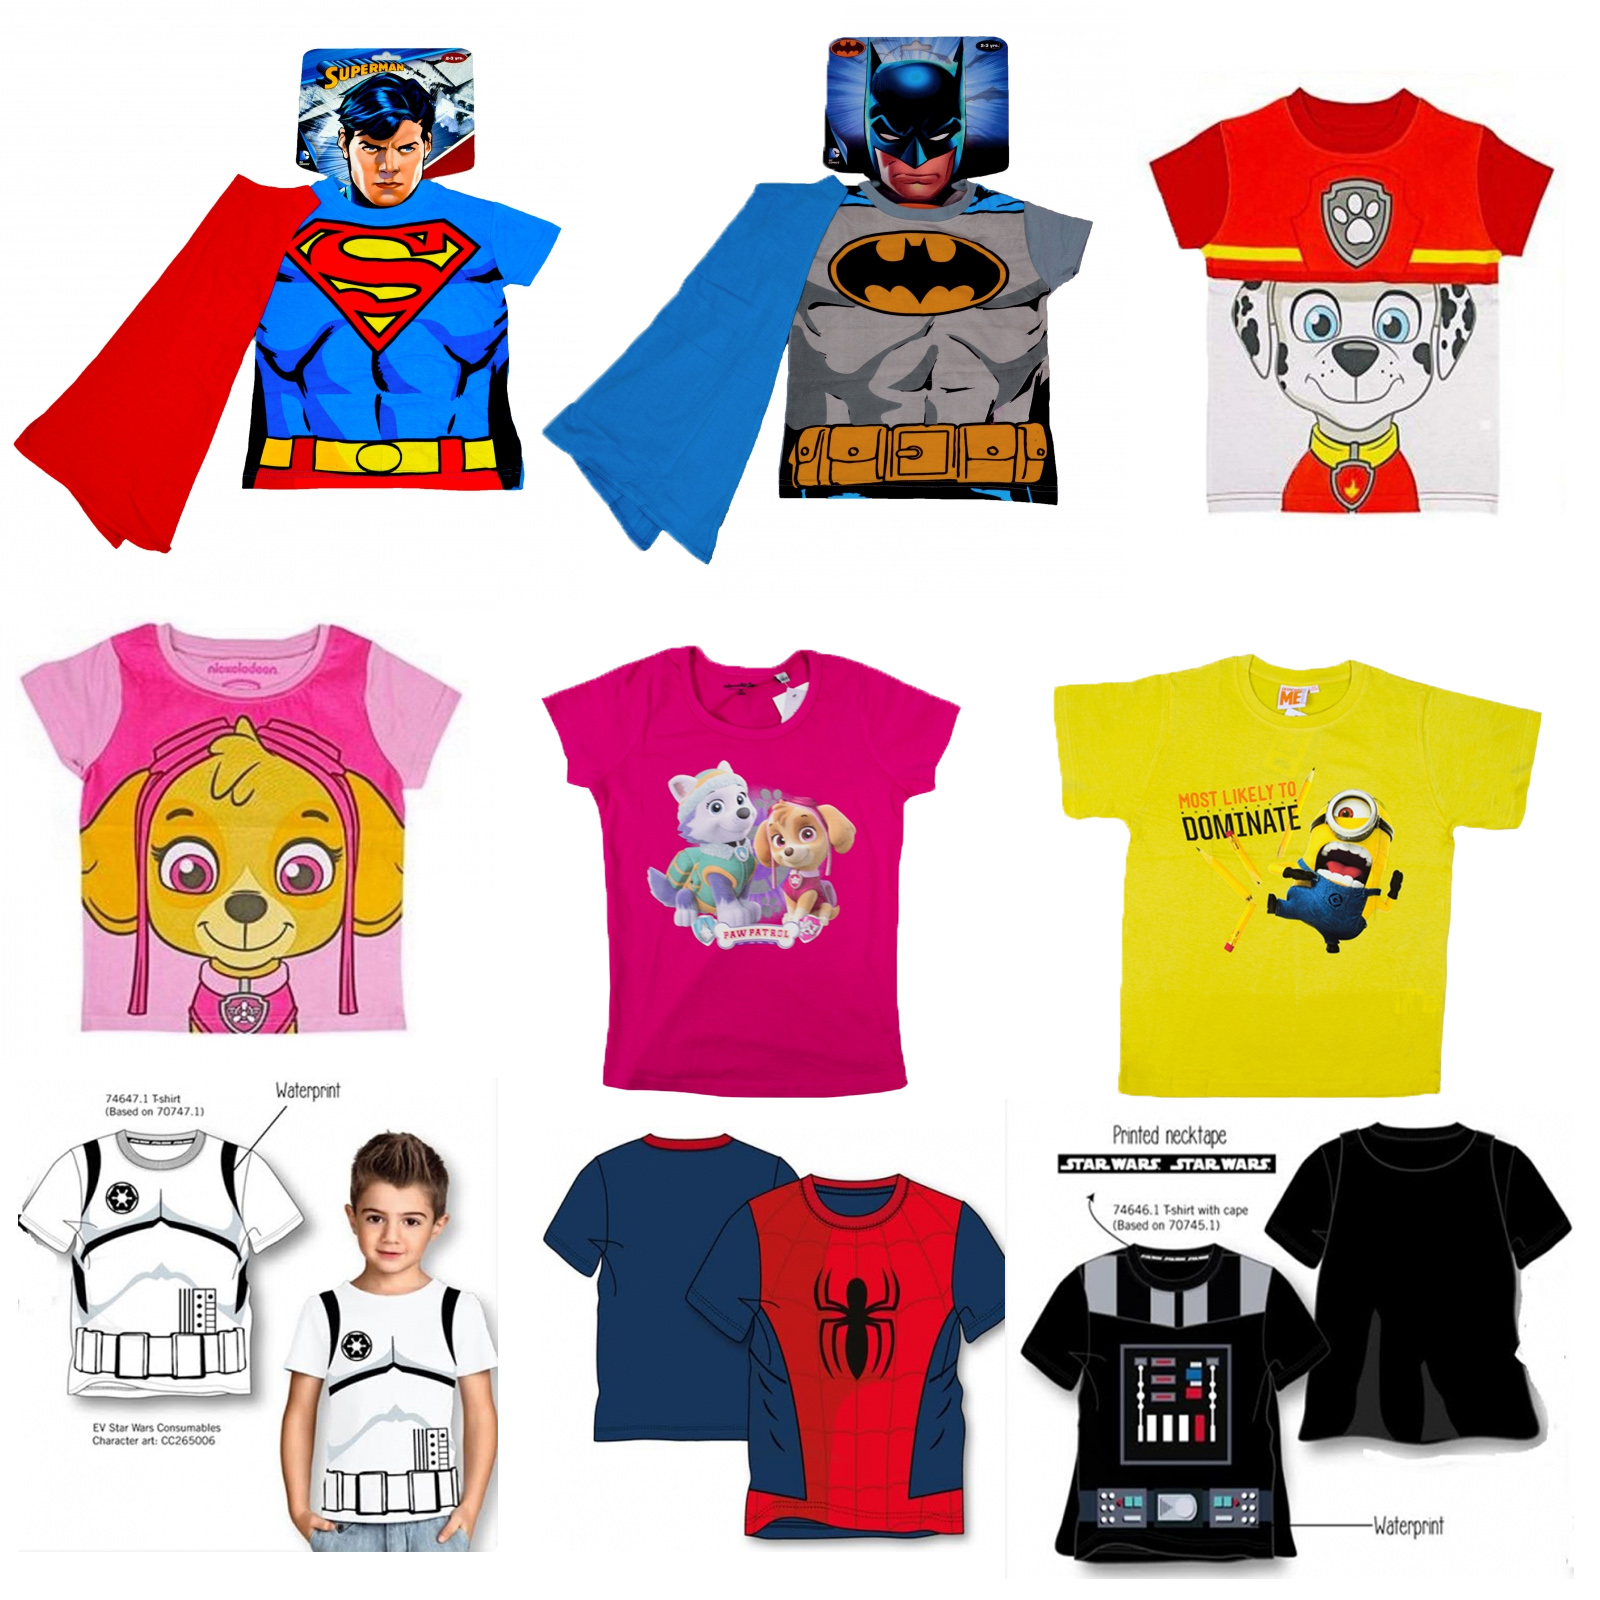 Official Kids Novelty TV Characters superheroes Dress Up Top Boys Girls t-shirt